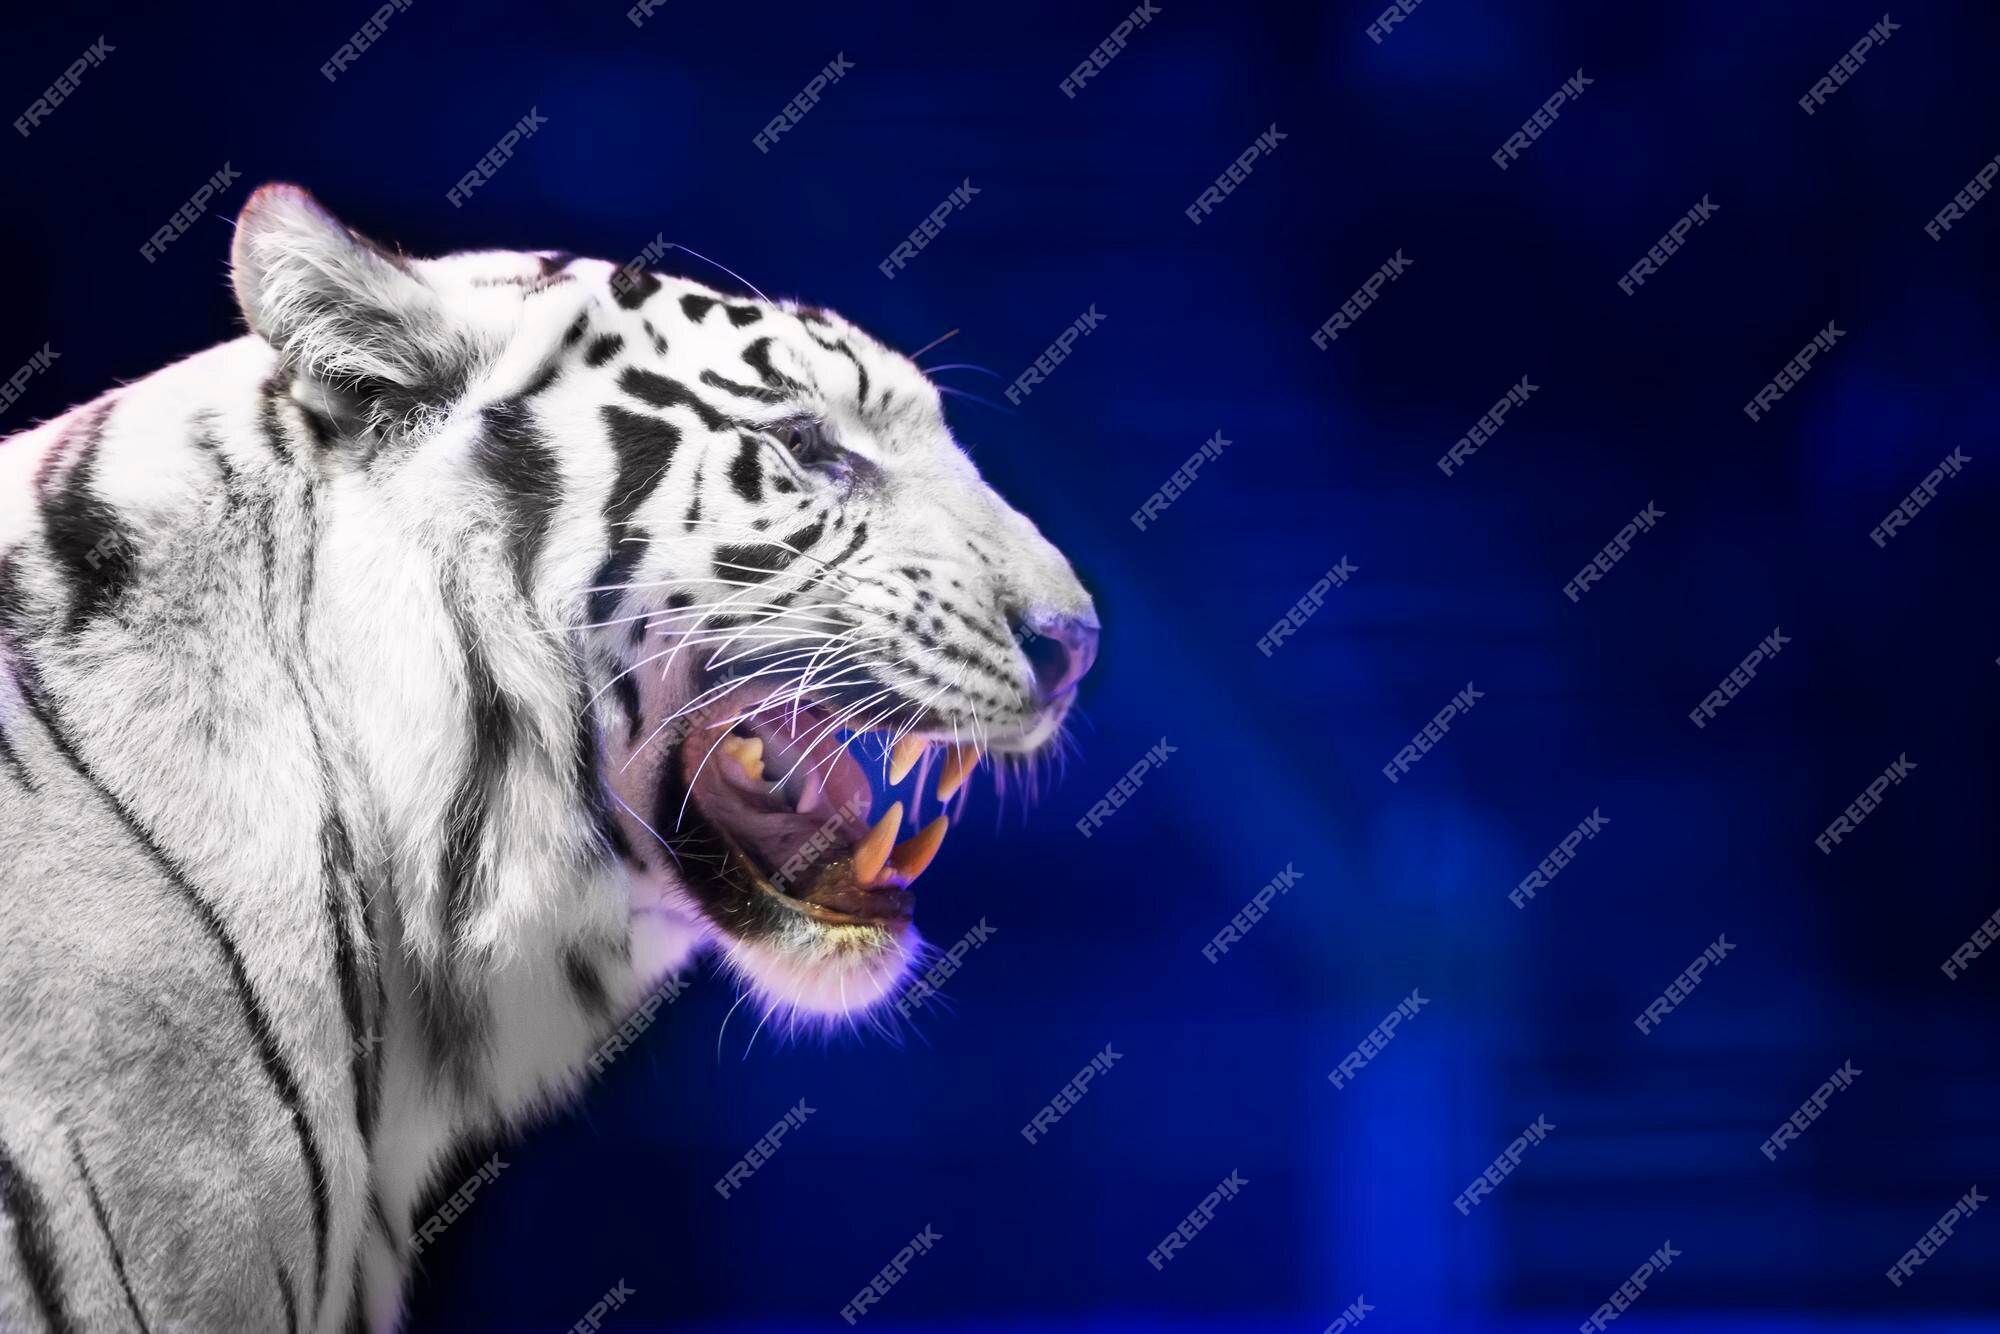 Premium Photo | White tiger closeup on a dark background